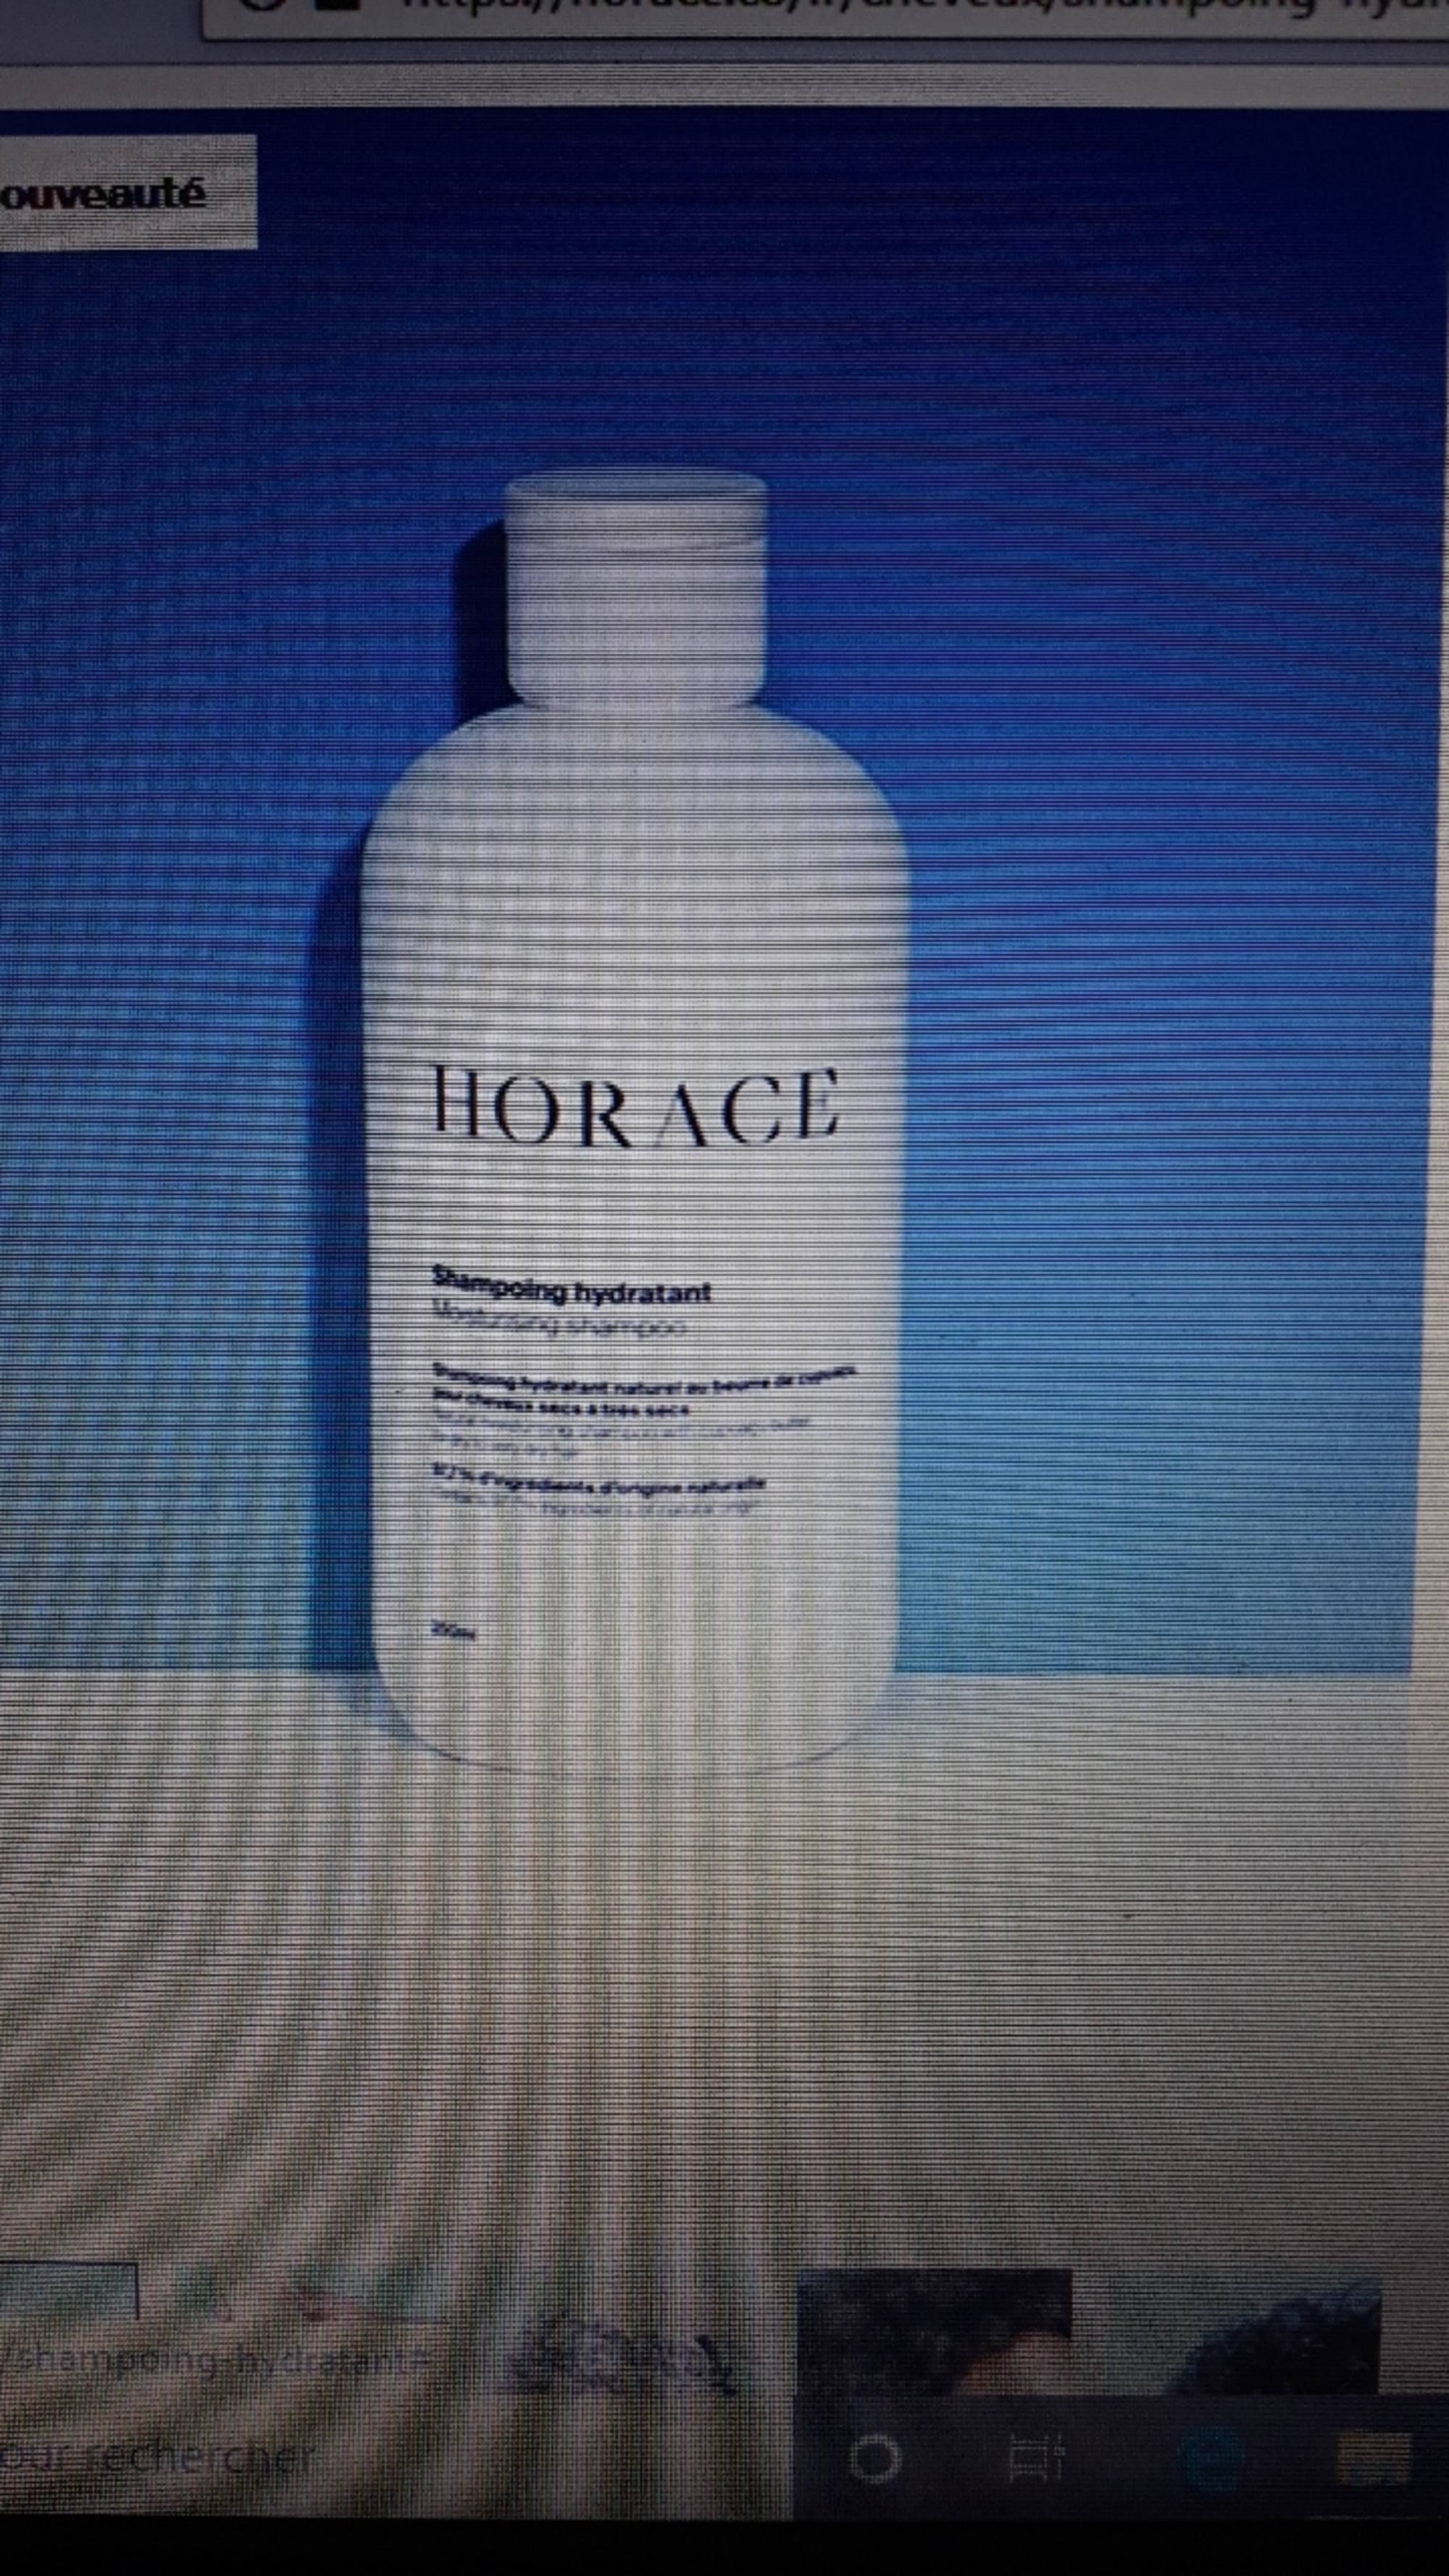 HORACE - Shampooing hydratant 